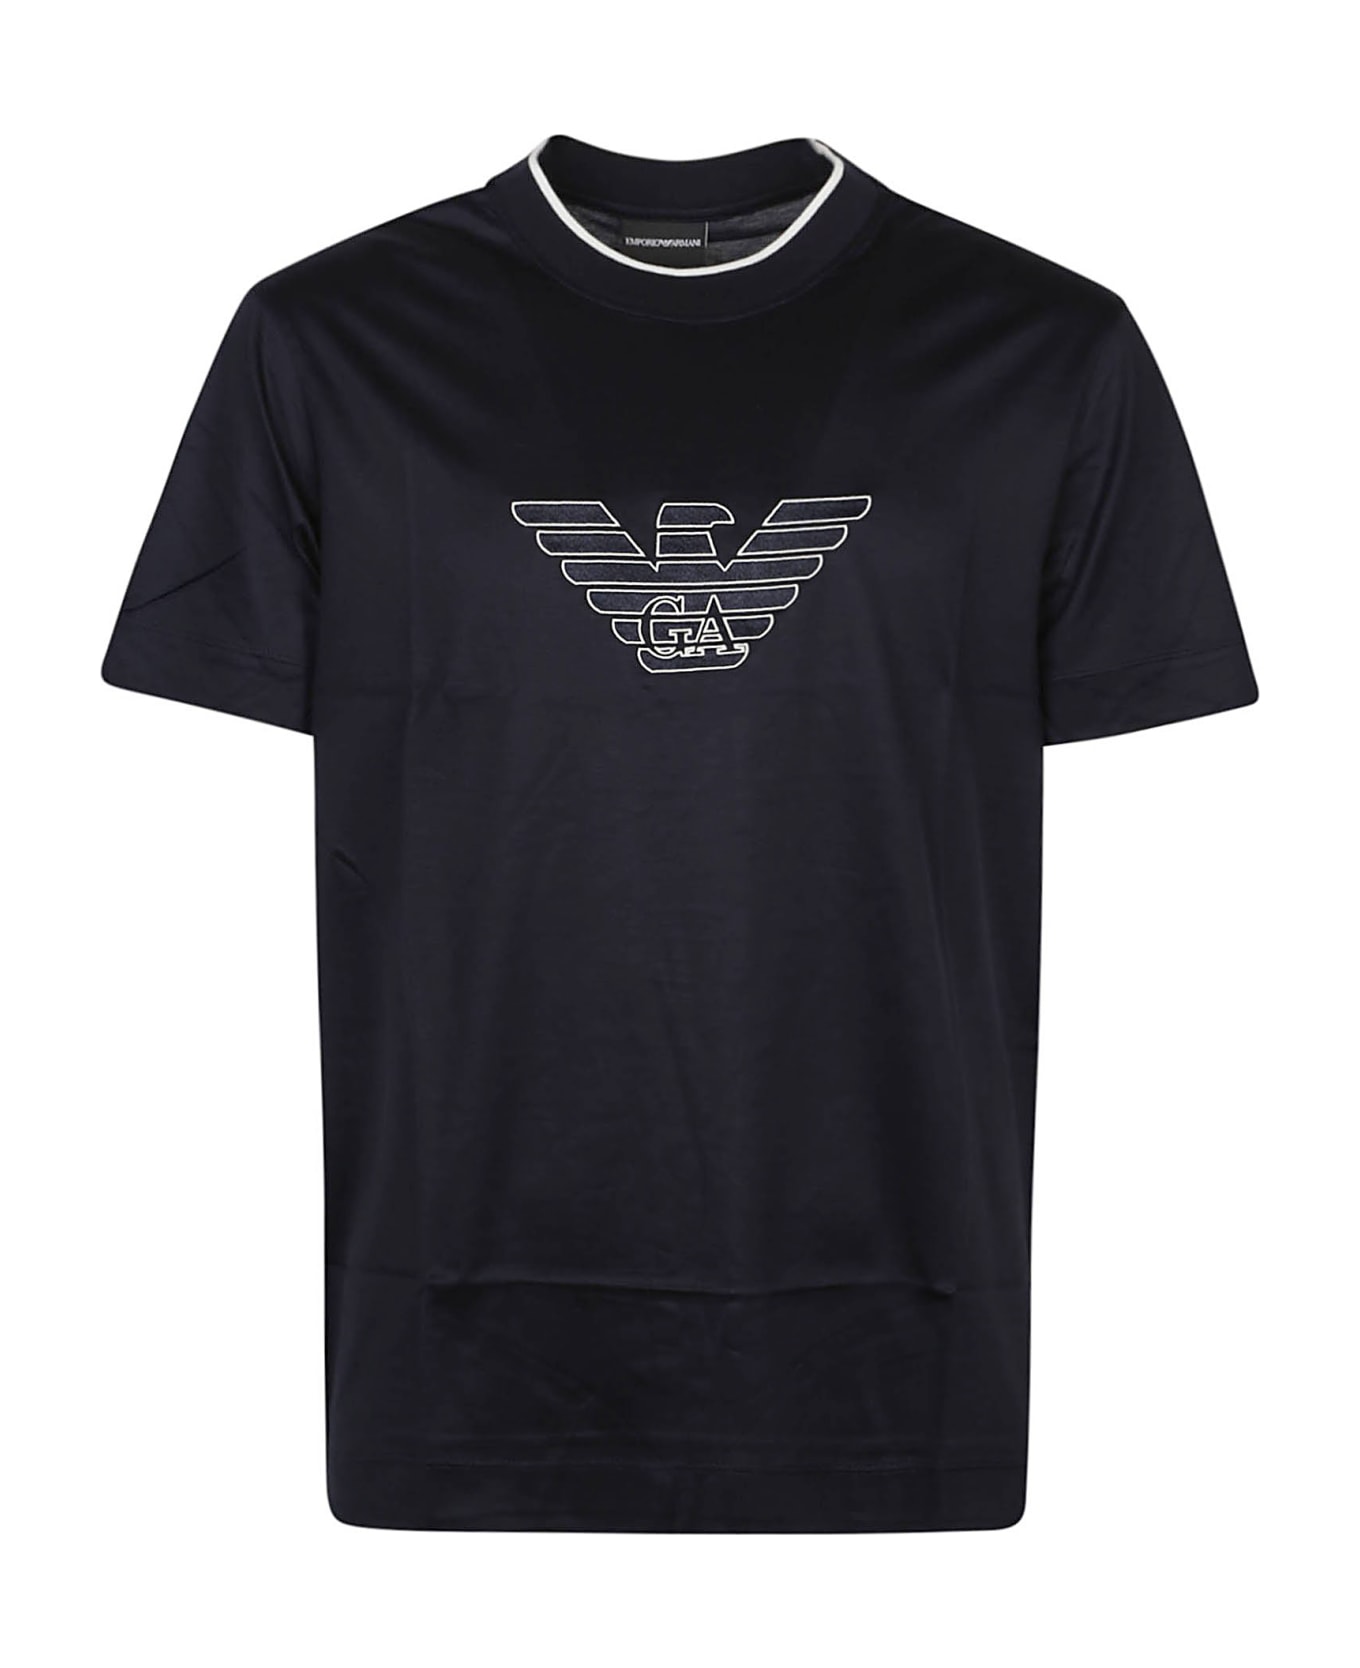 Emporio Armani T-shirt - Eagle Navy